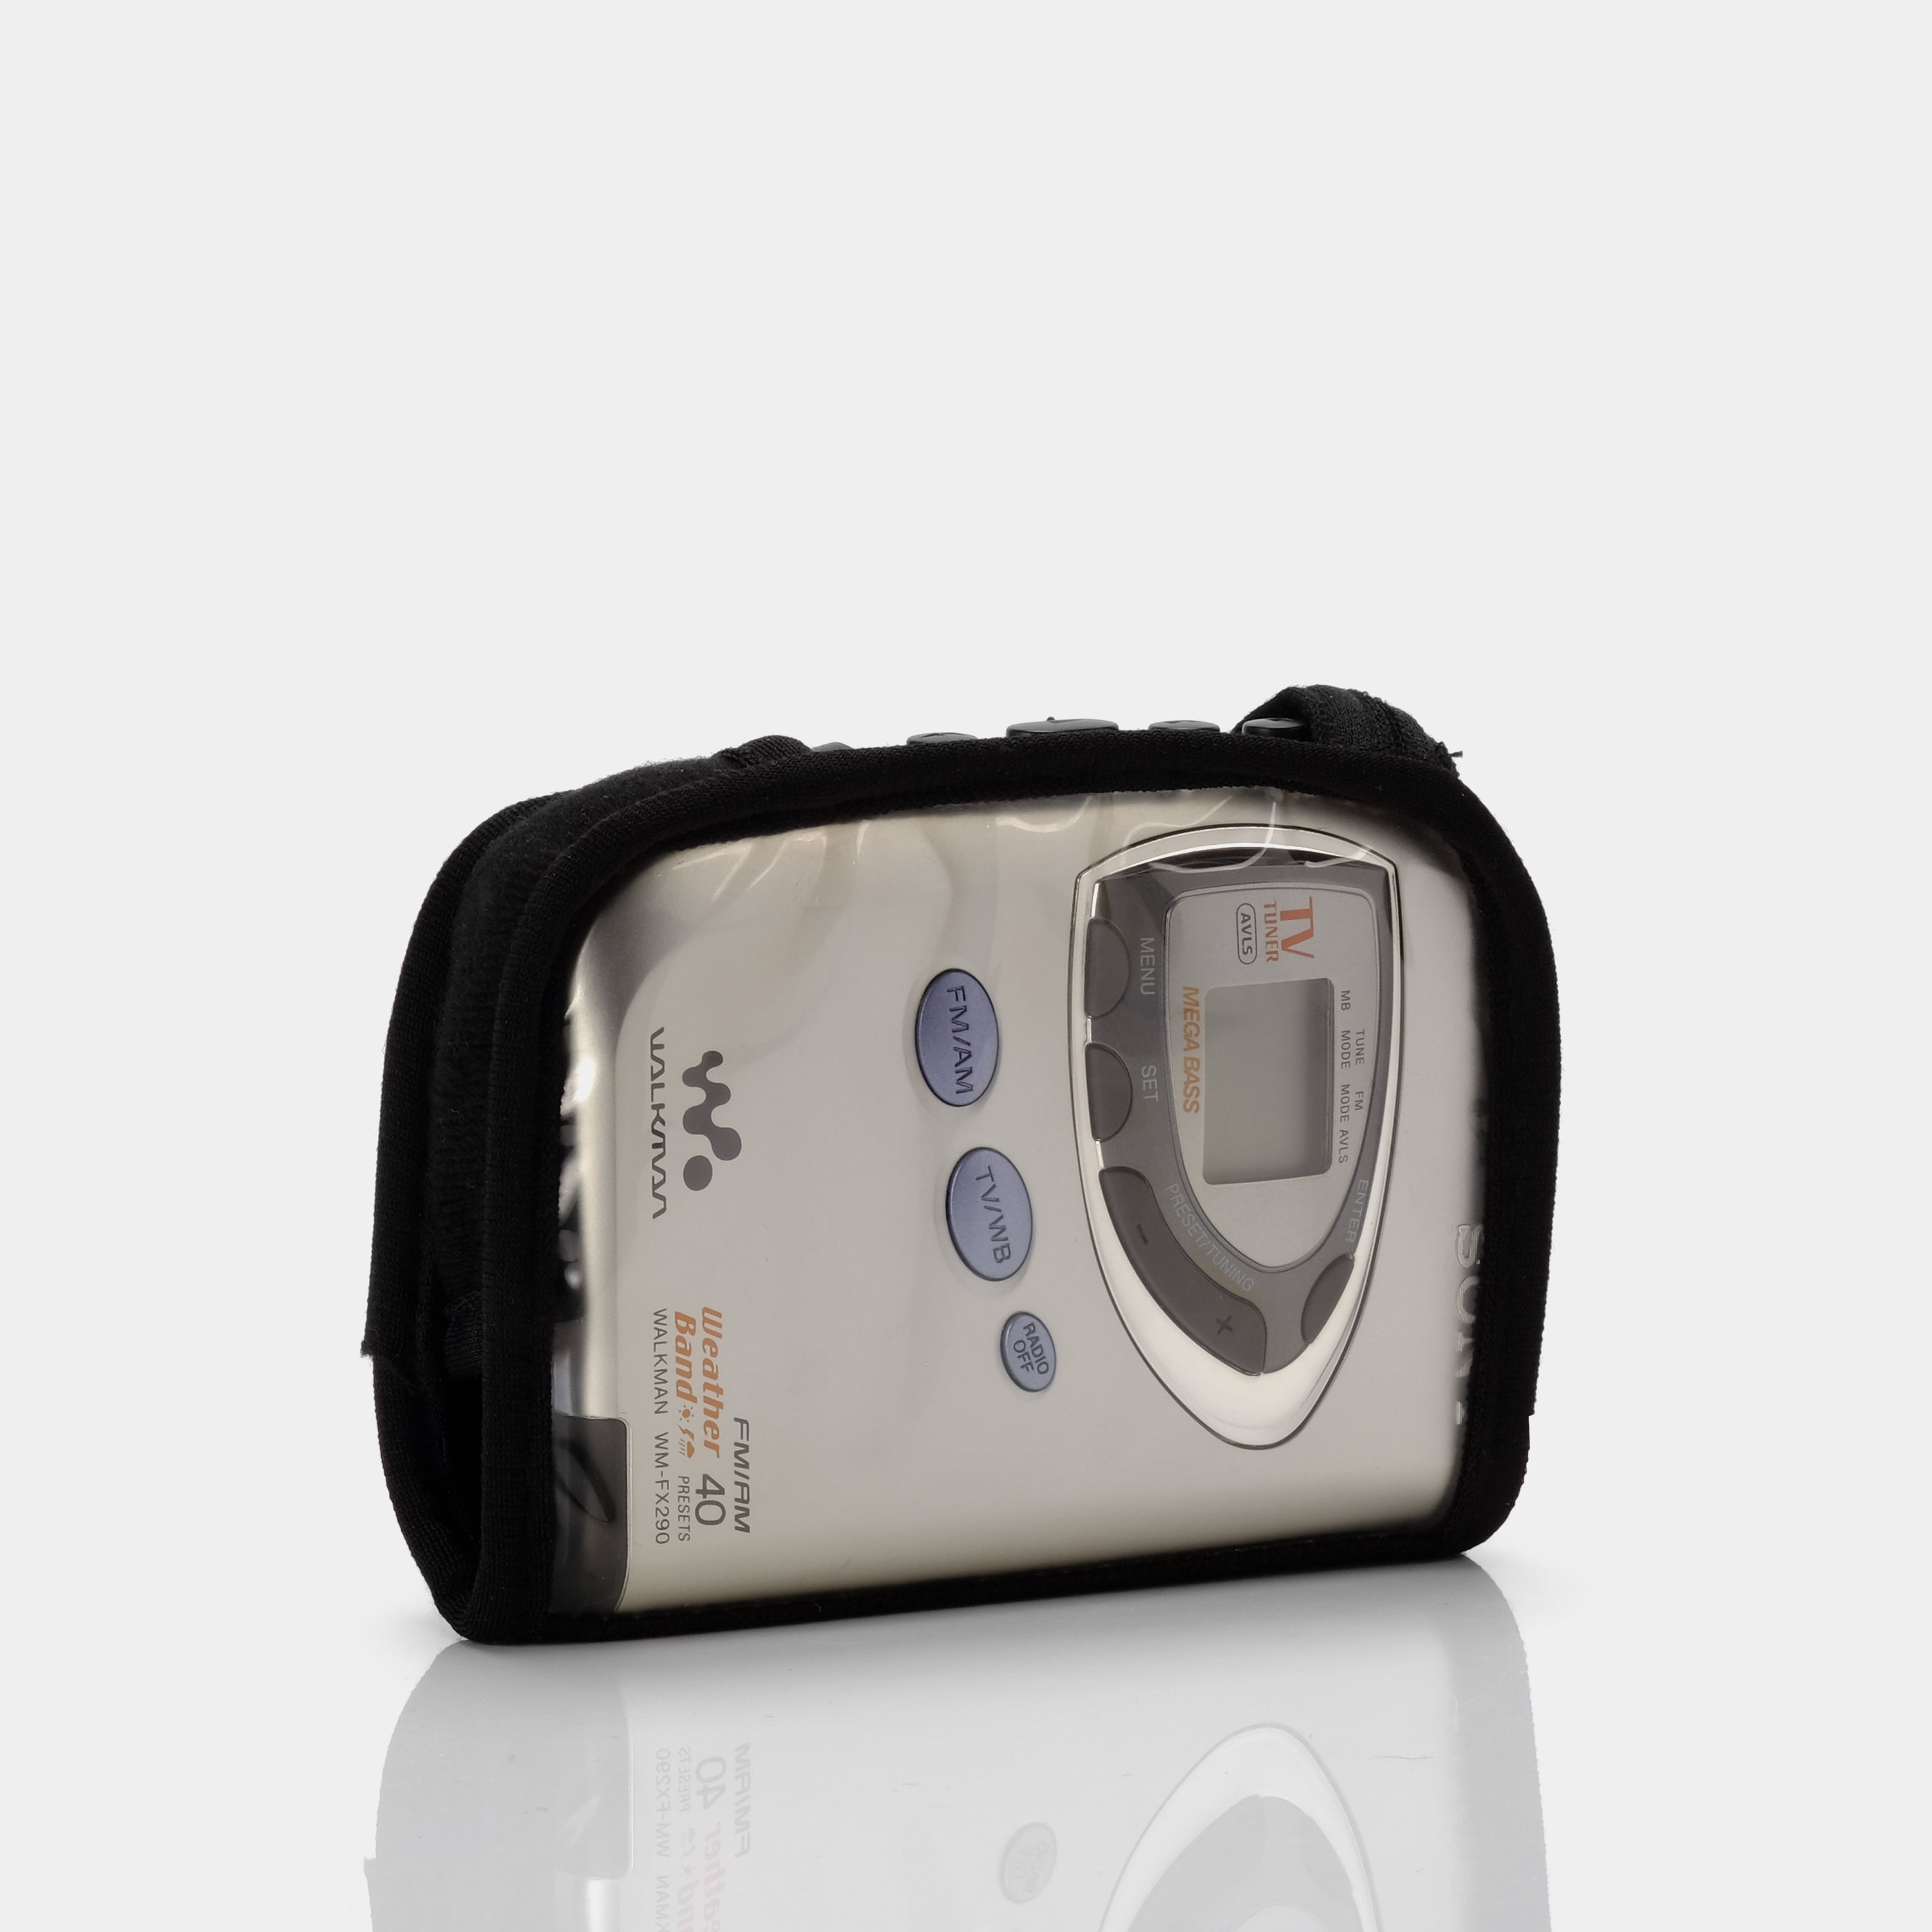 Sony WM-FX290 Silver Walkman Portable Cassette Player and AM/FM Radio